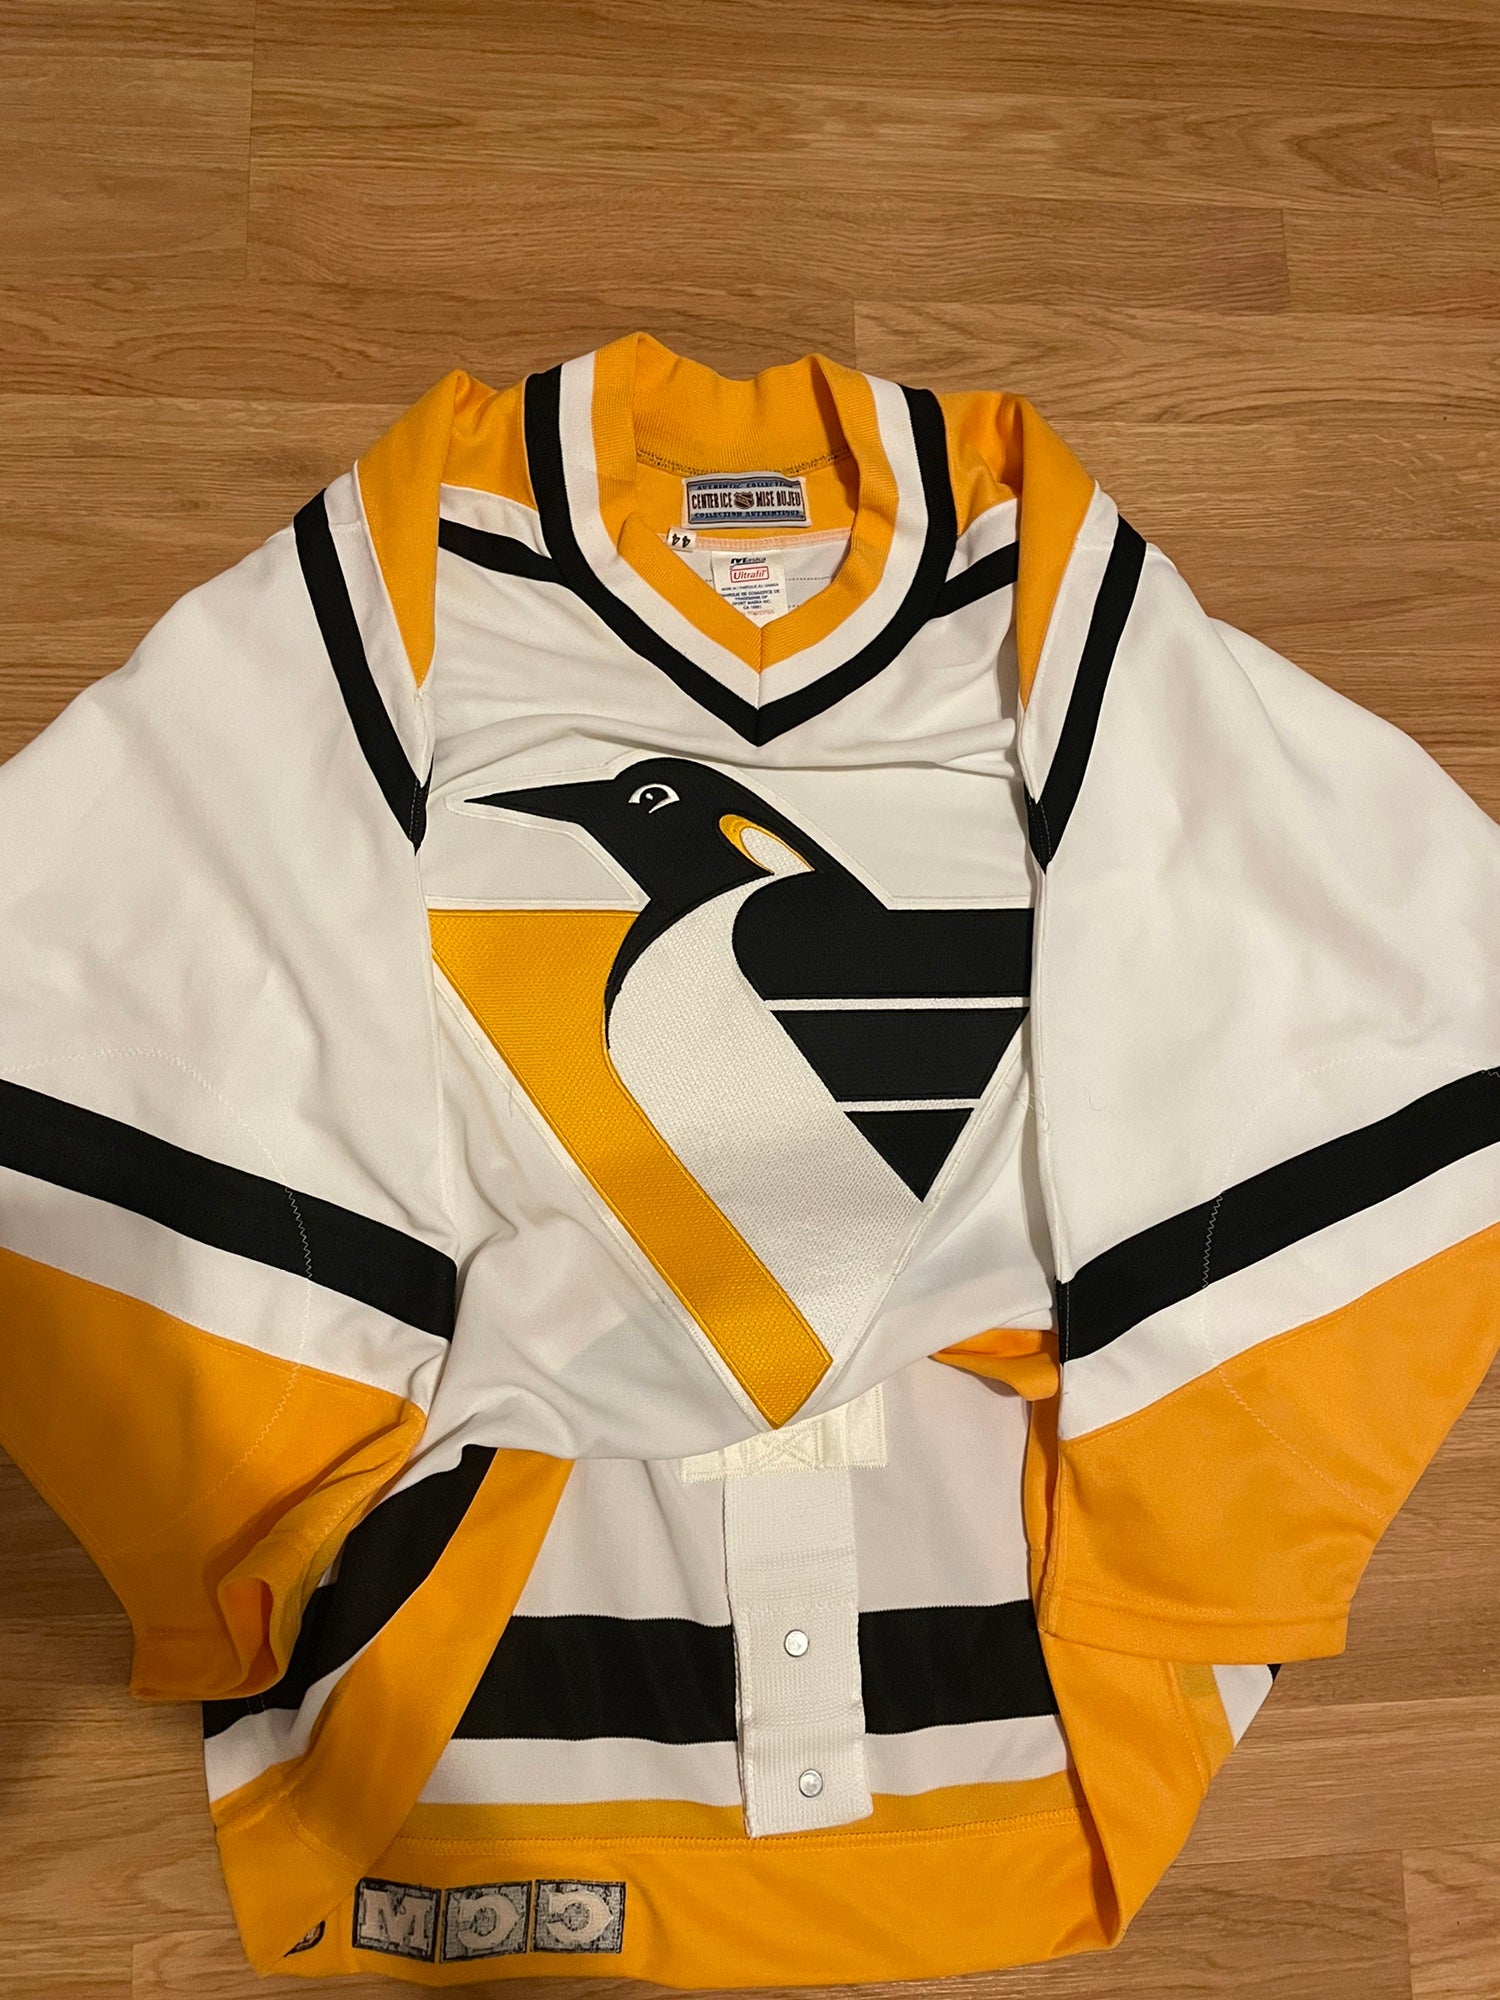 Black Pyramid Hockey Jersey Ducks 1989 #89 Orange Black M Stitched